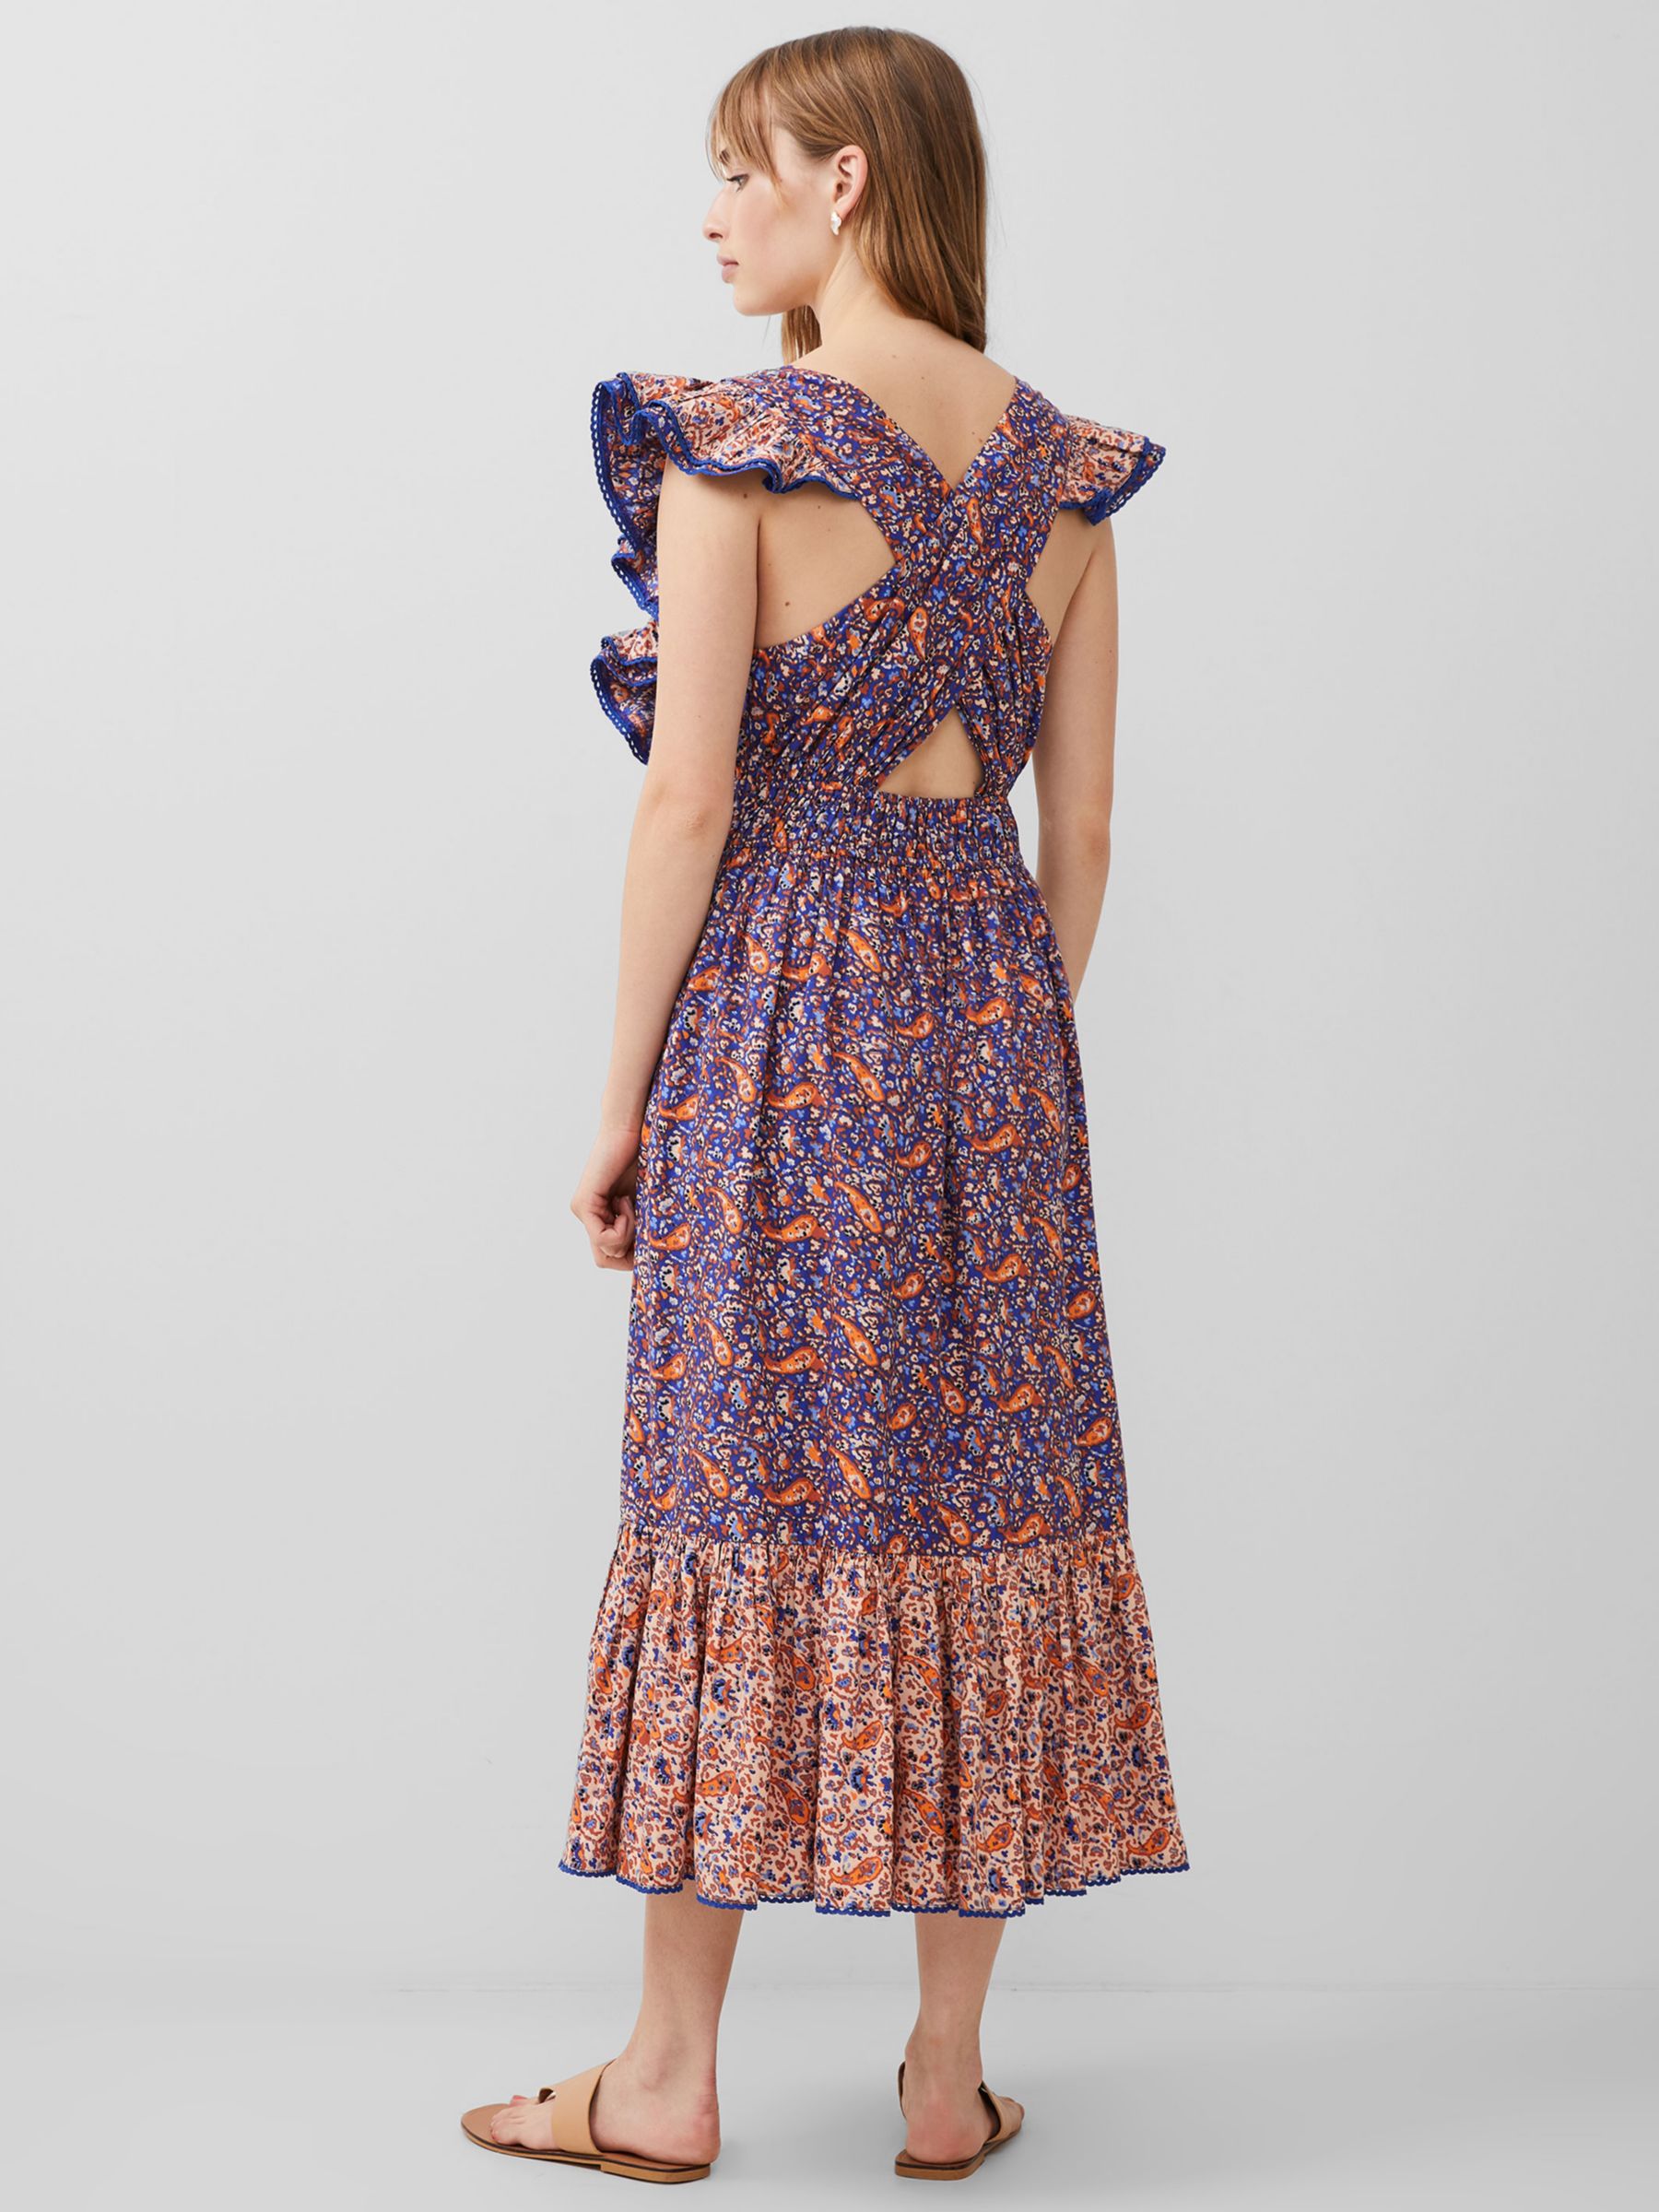 French Connection Anathia Blaire Paisley Print Frill Trim Maxi Dress, Royal Blue/Peach, 10